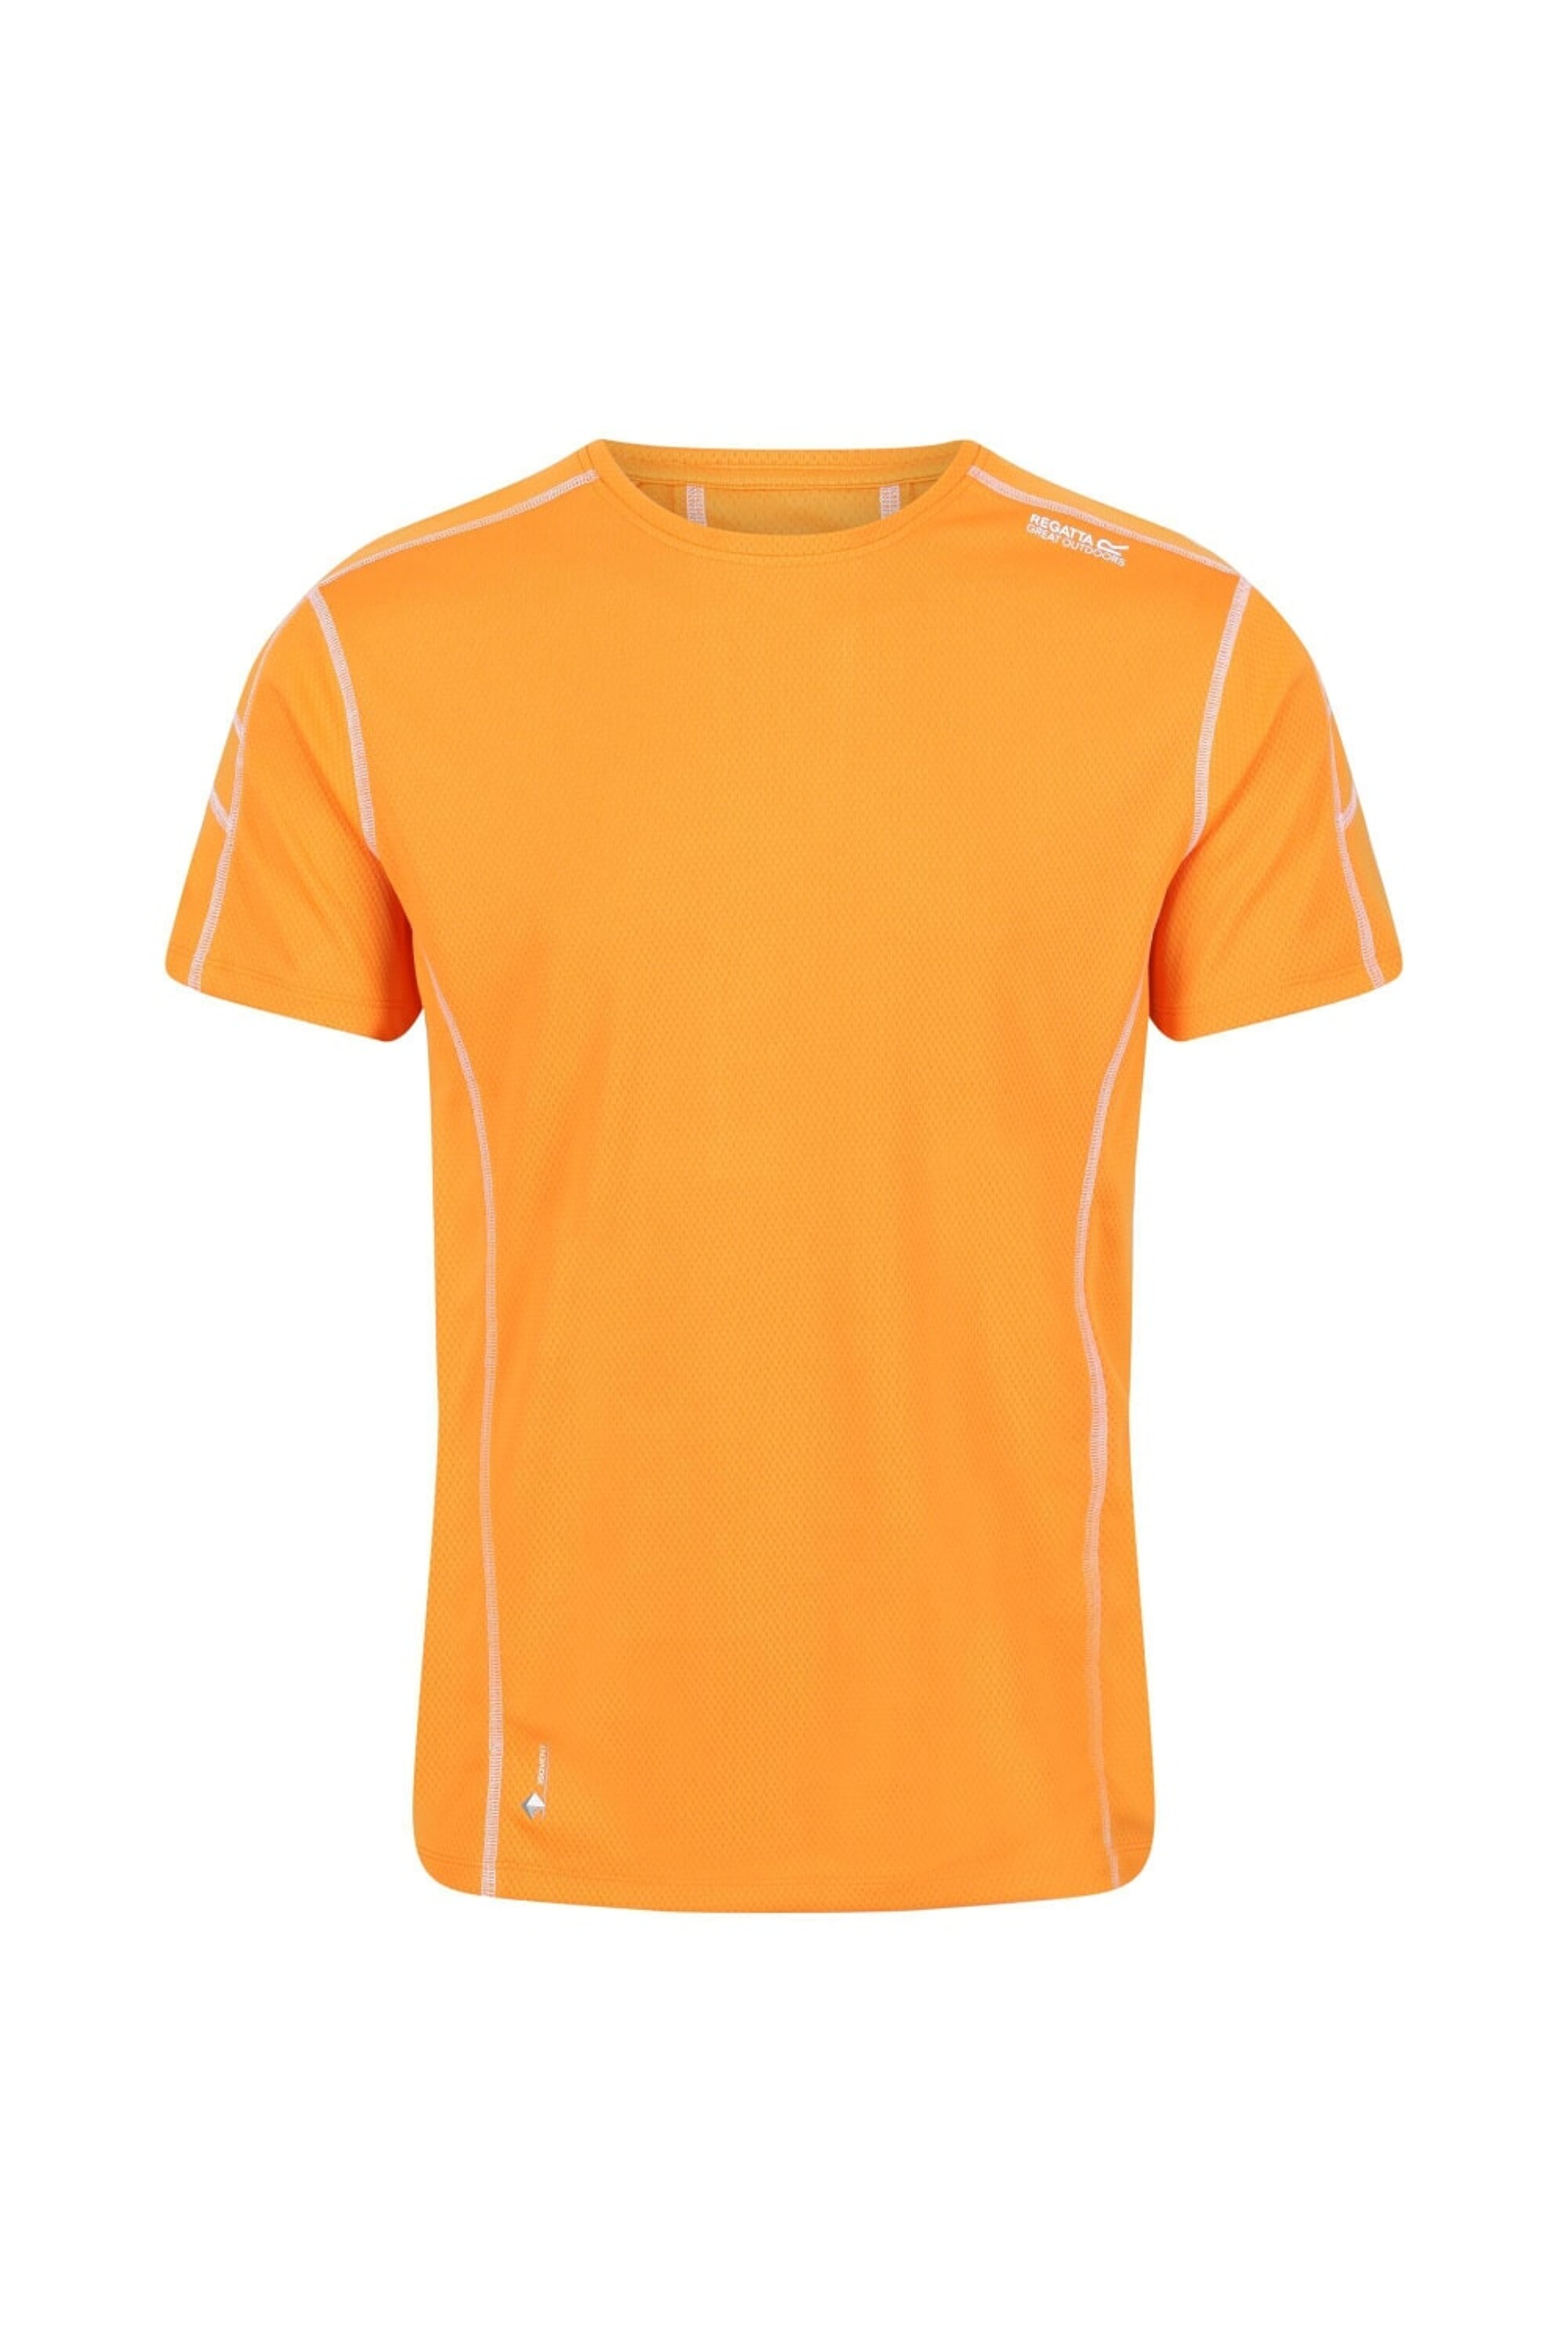 Regatta Men's Virda II Active T-Shirt Orange 